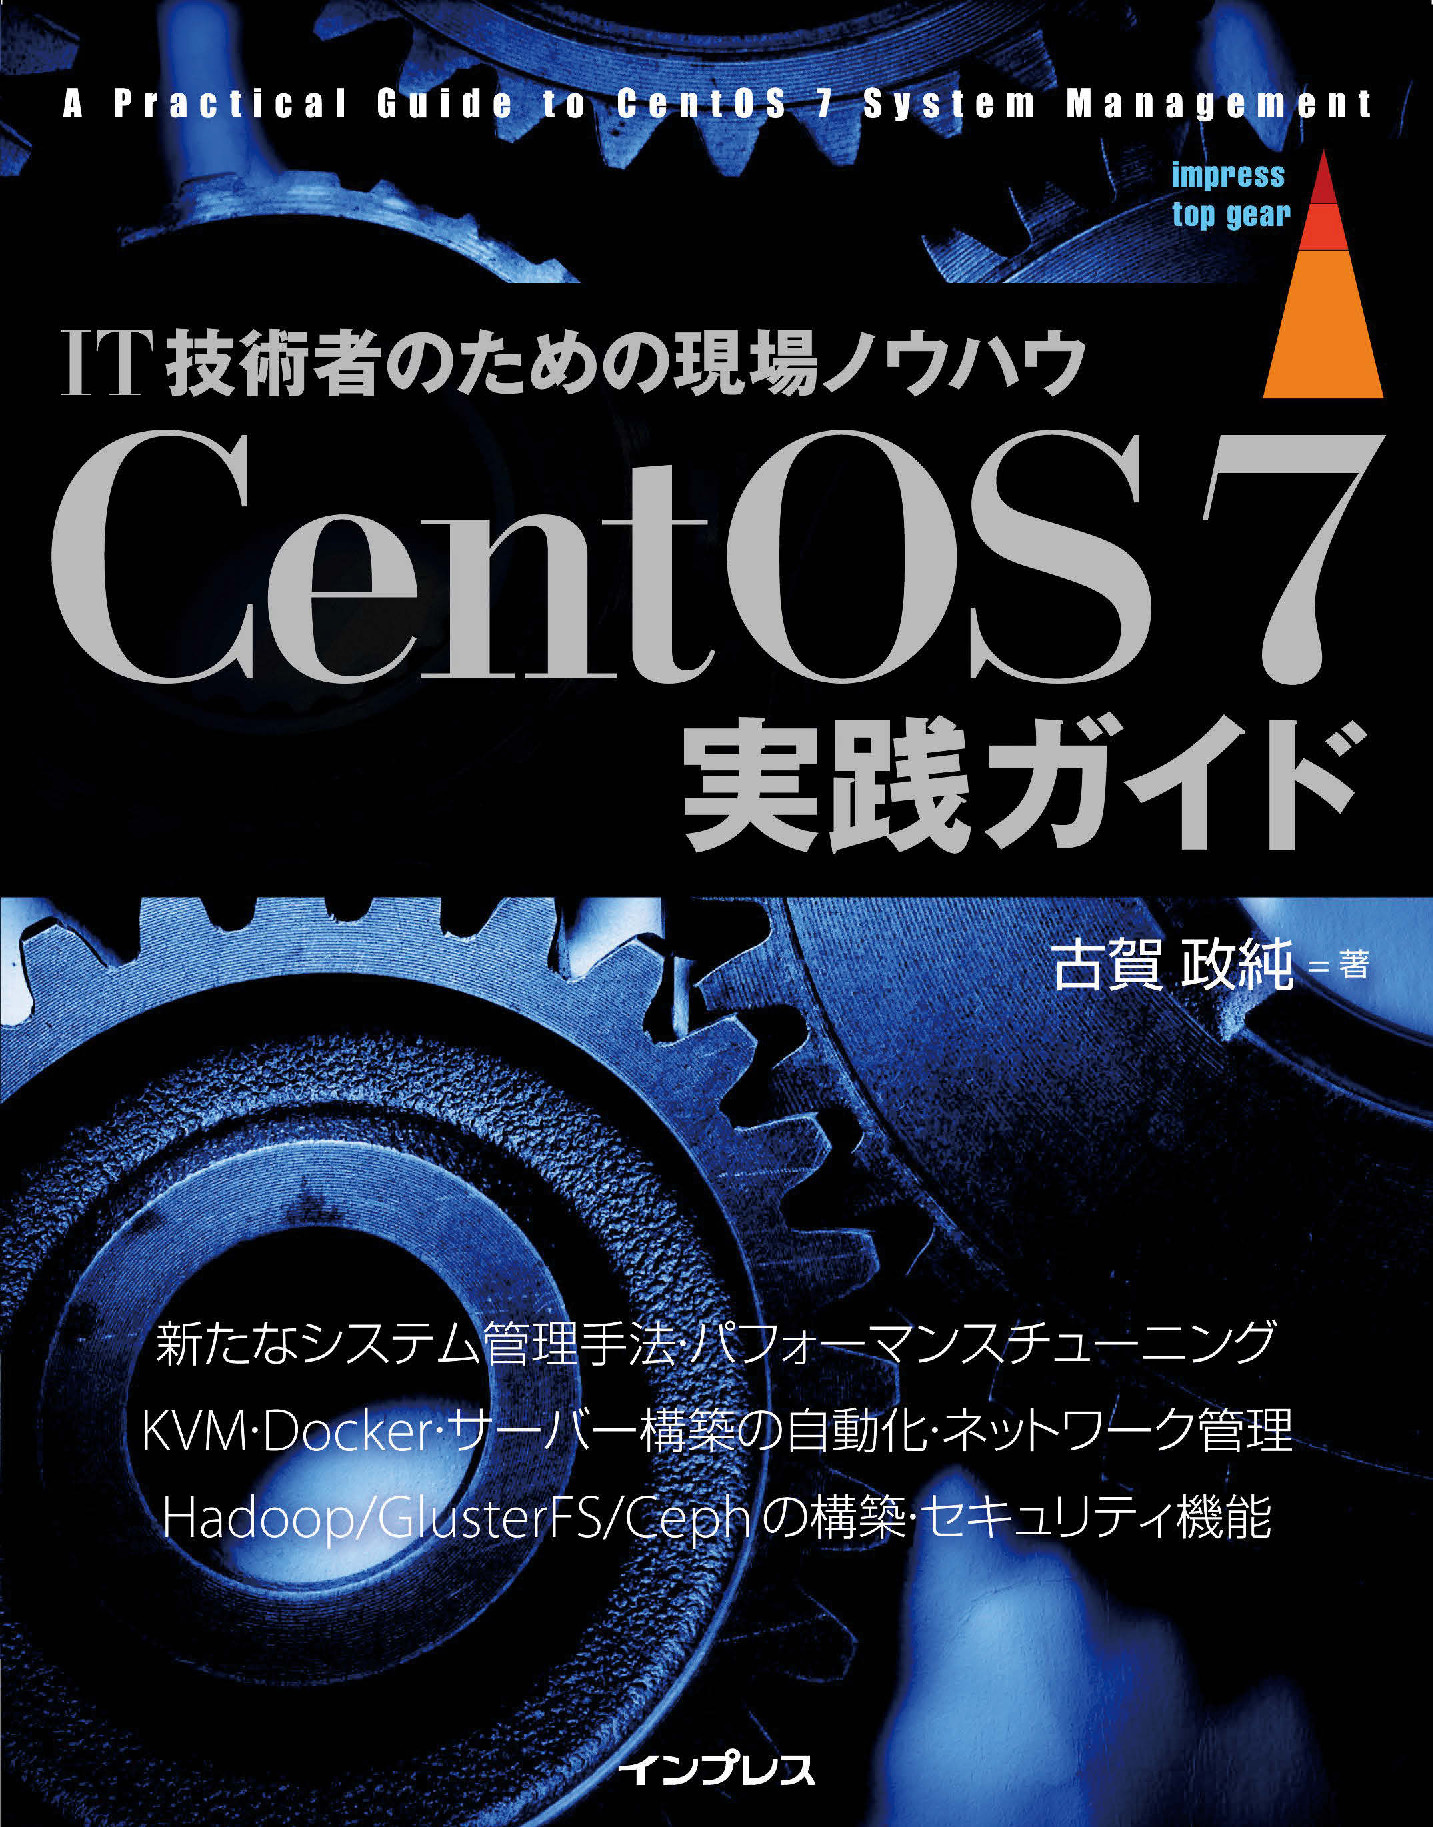 CentOS 7実践ガイド【委託】 - 達人出版会